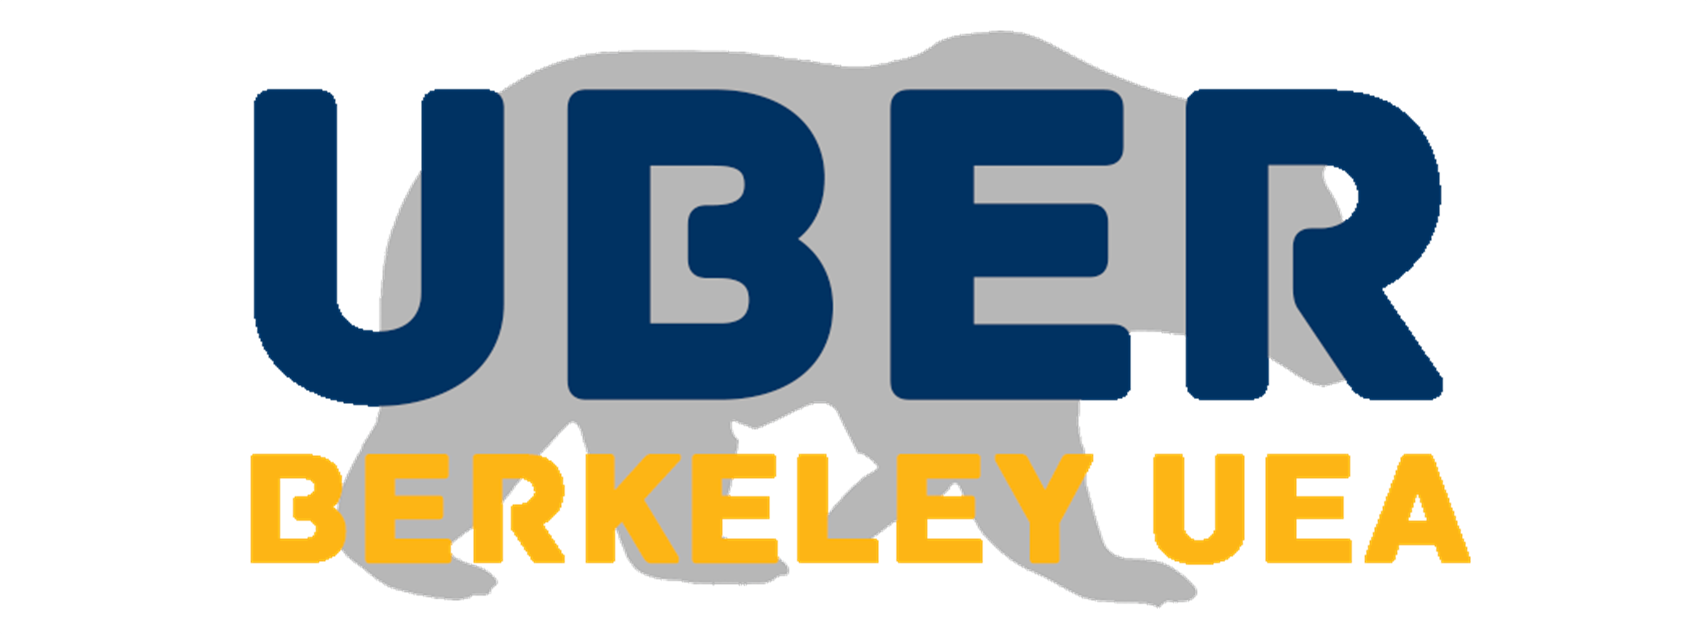 undergraduate berkeley economic review